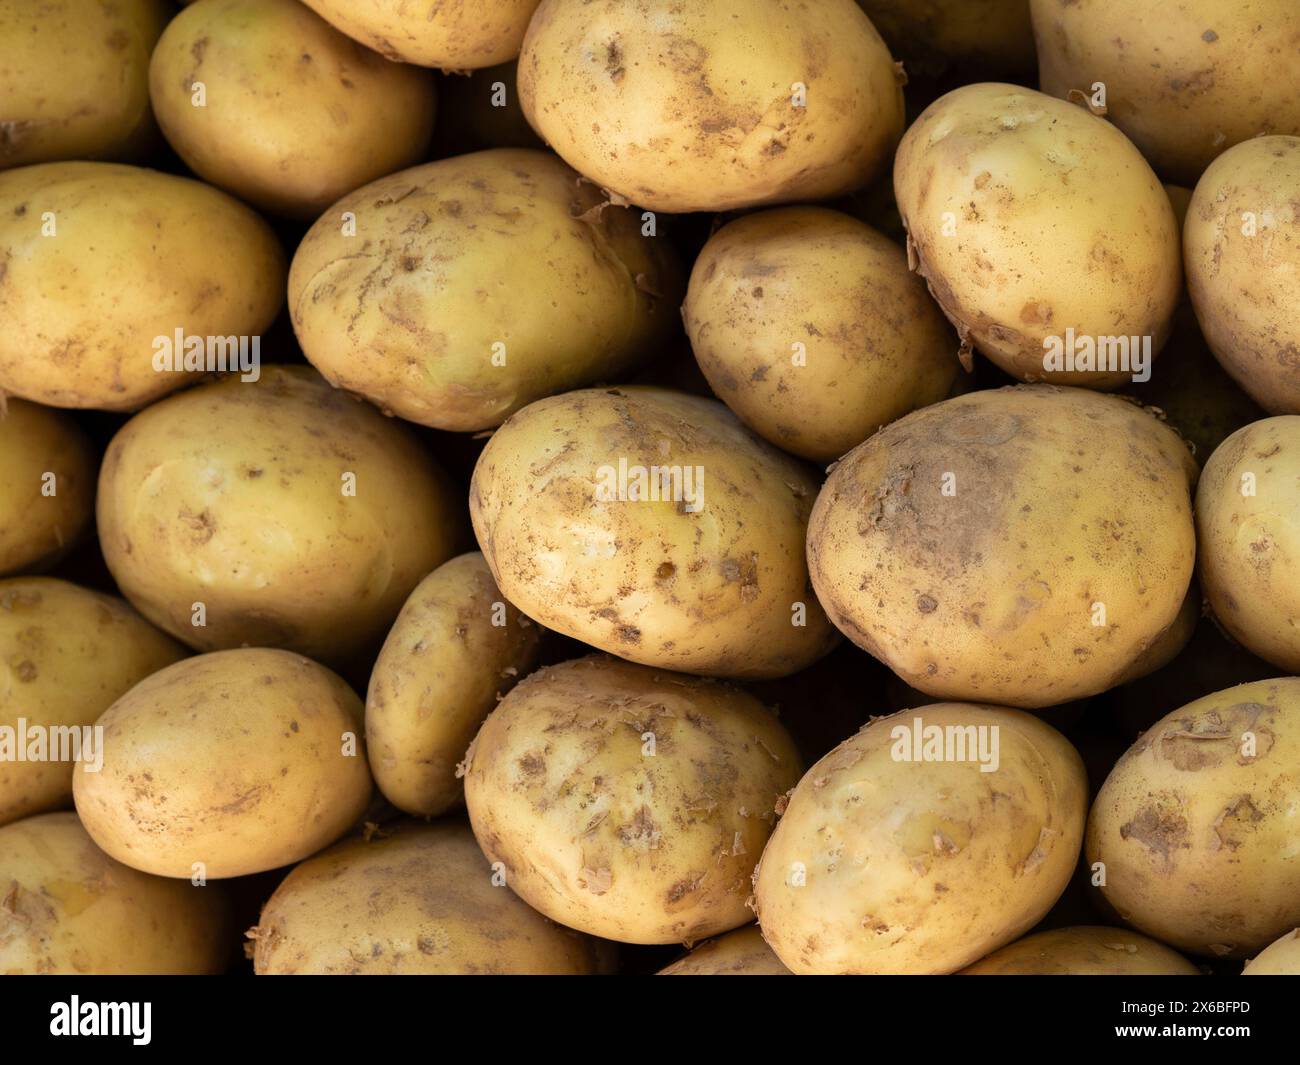 Bulk potatoes for sale at the market Stock Photo